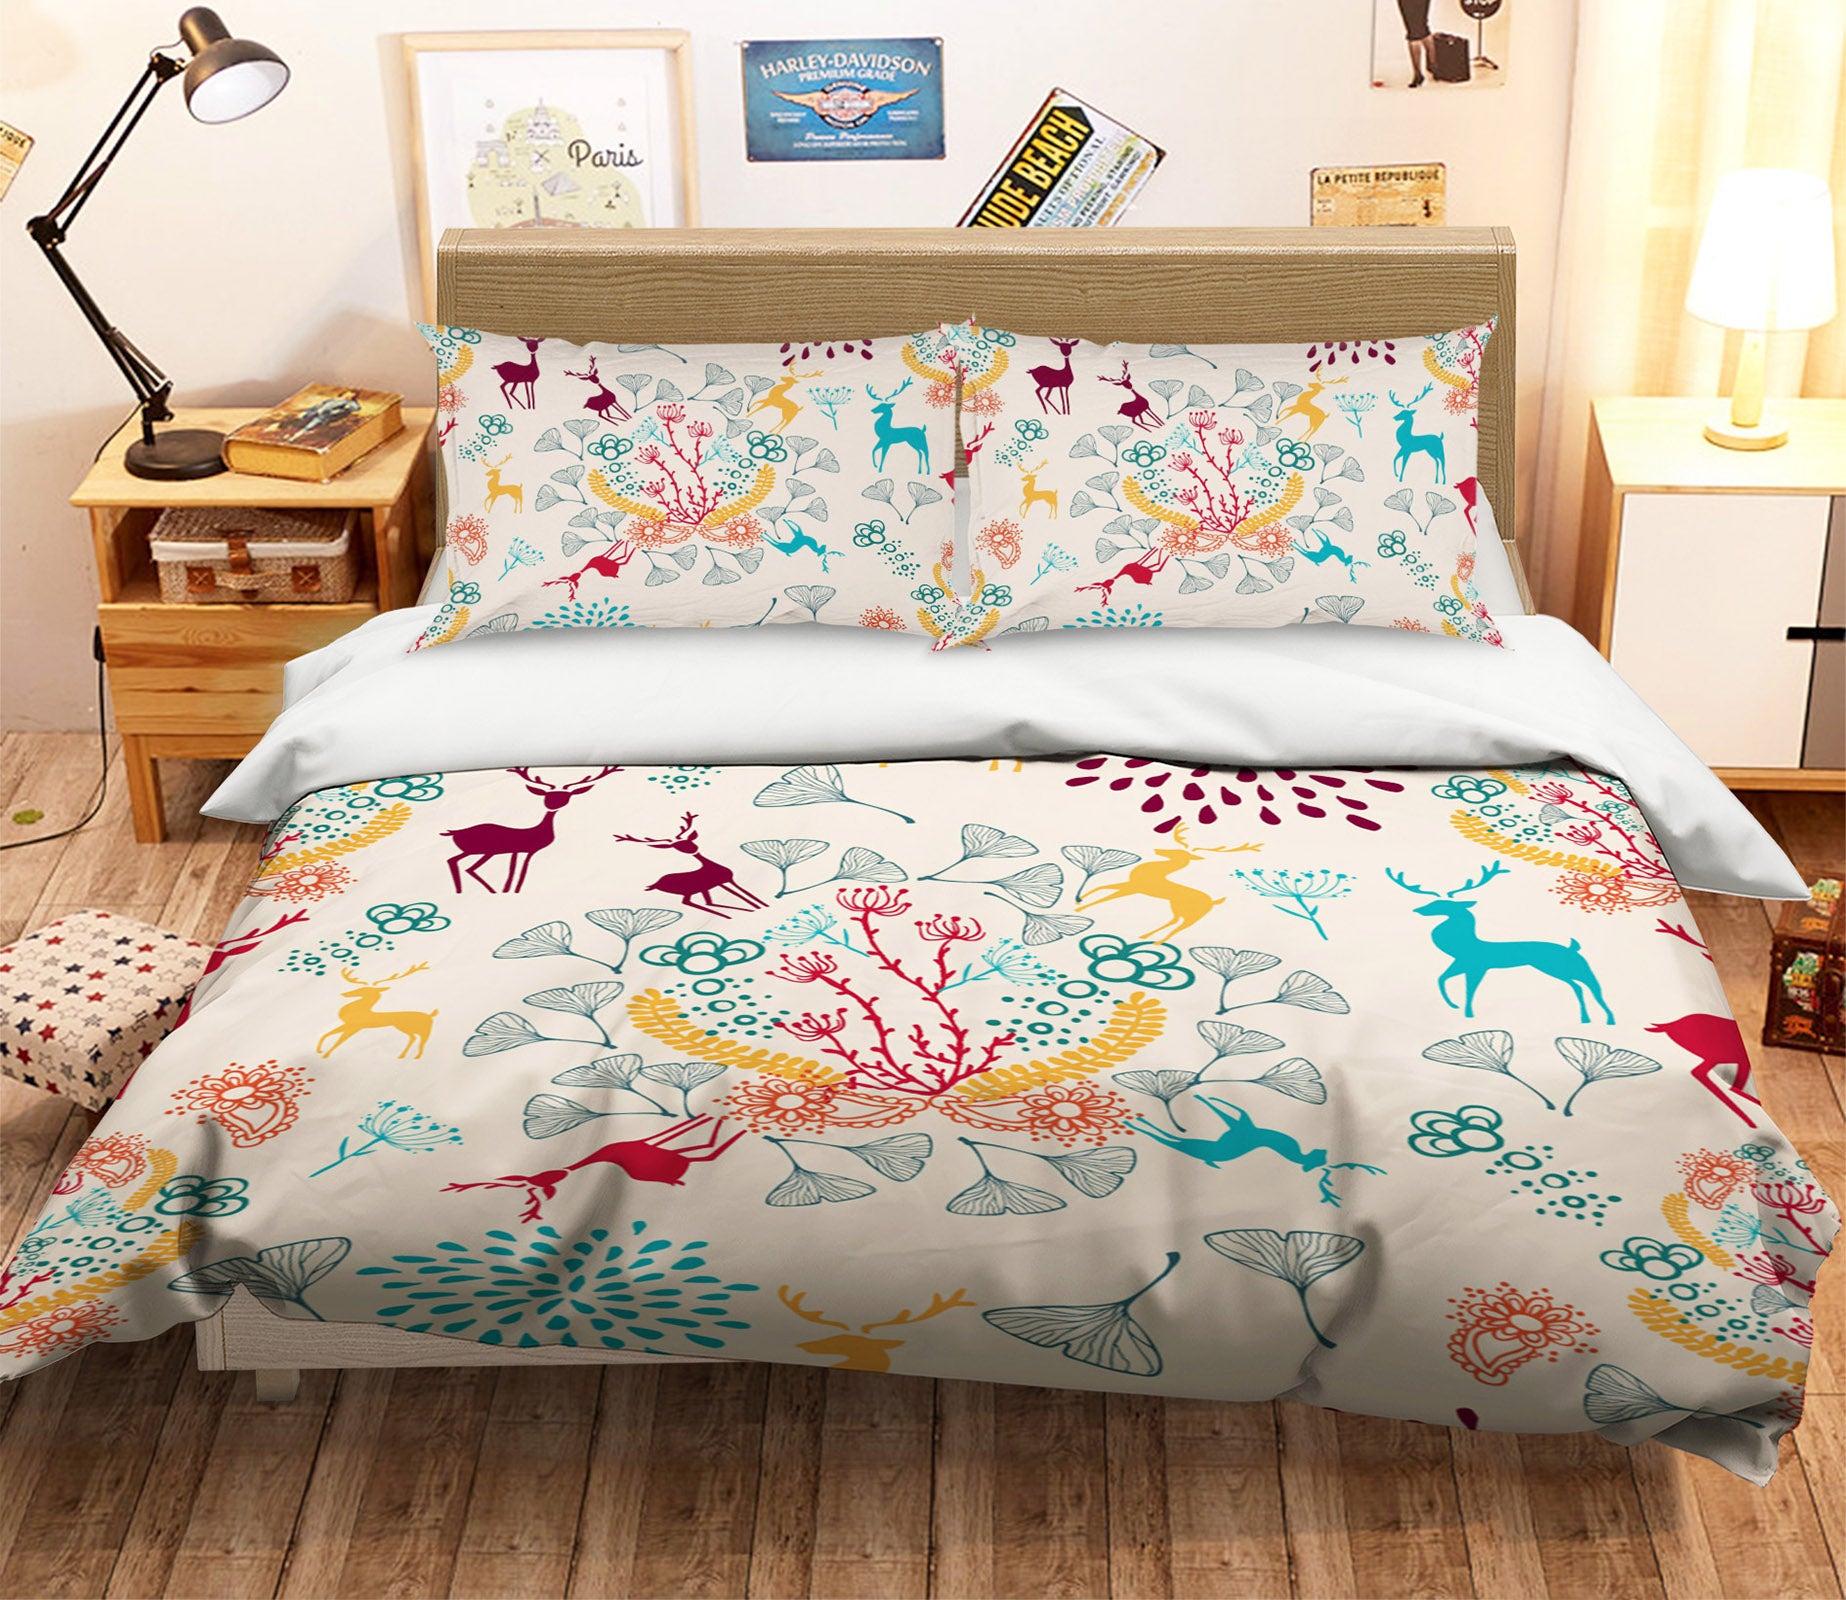 3D Deer Tree 31117 Christmas Quilt Duvet Cover Xmas Bed Pillowcases